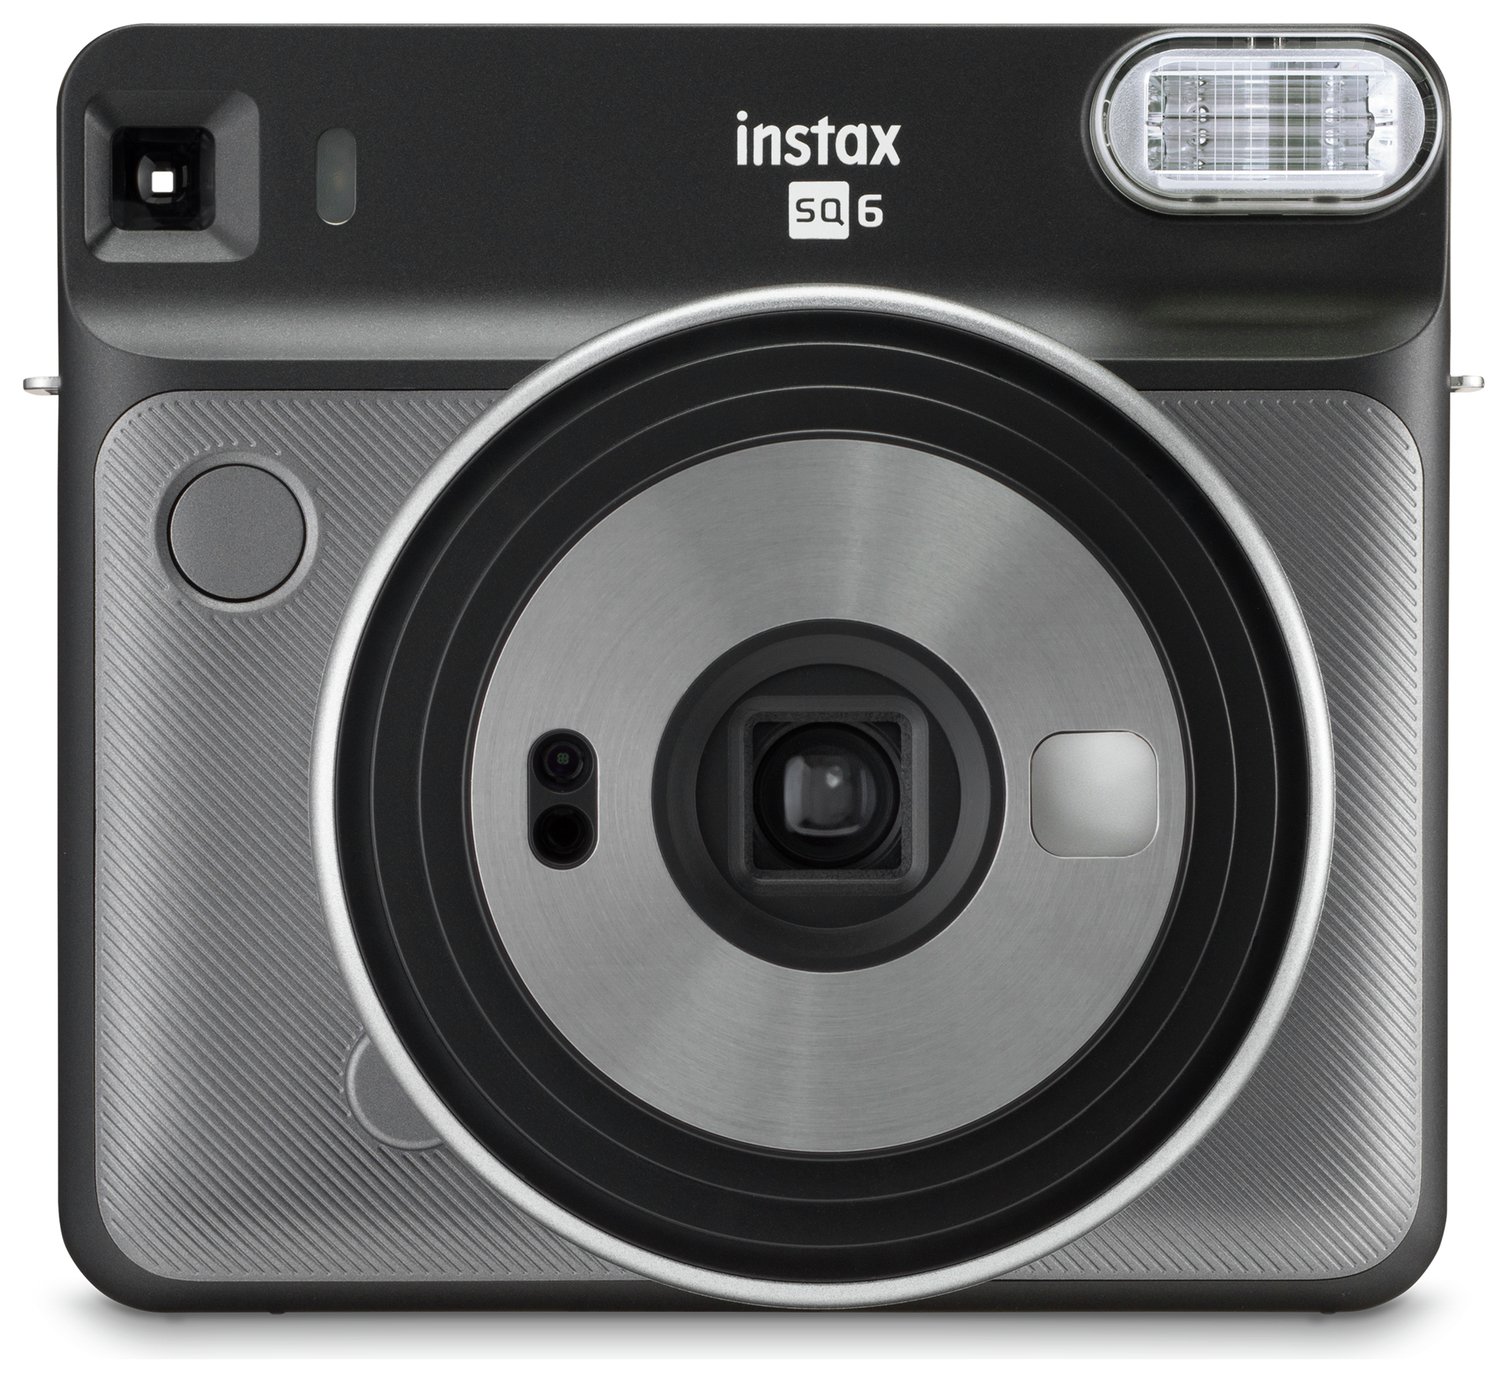 instax SQ 6 Instant Camera - Graphite Grey